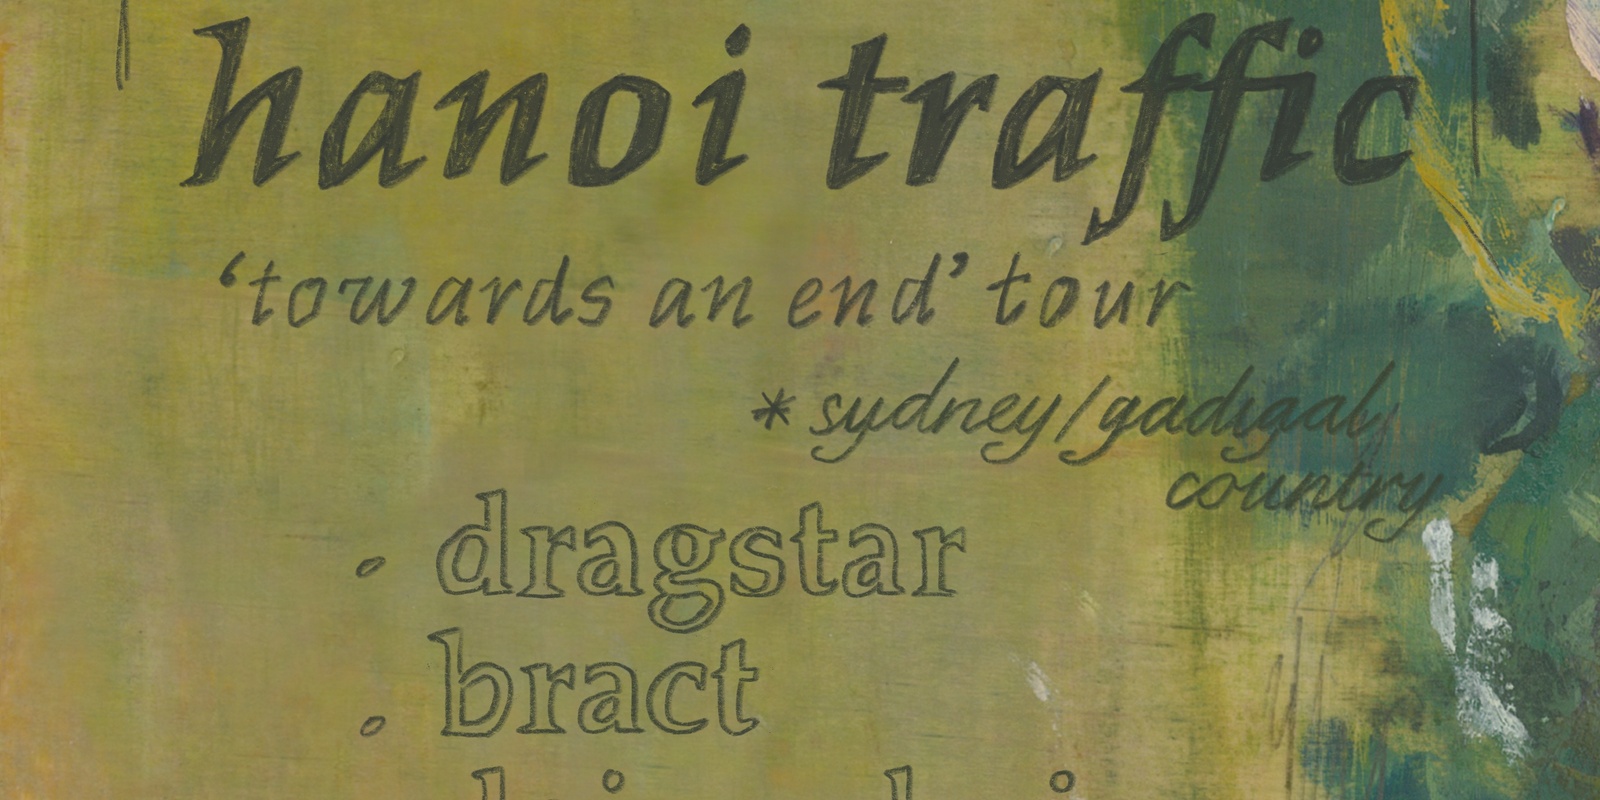 Banner image for hanoi traffic ‘towards an end’ tour - sydney